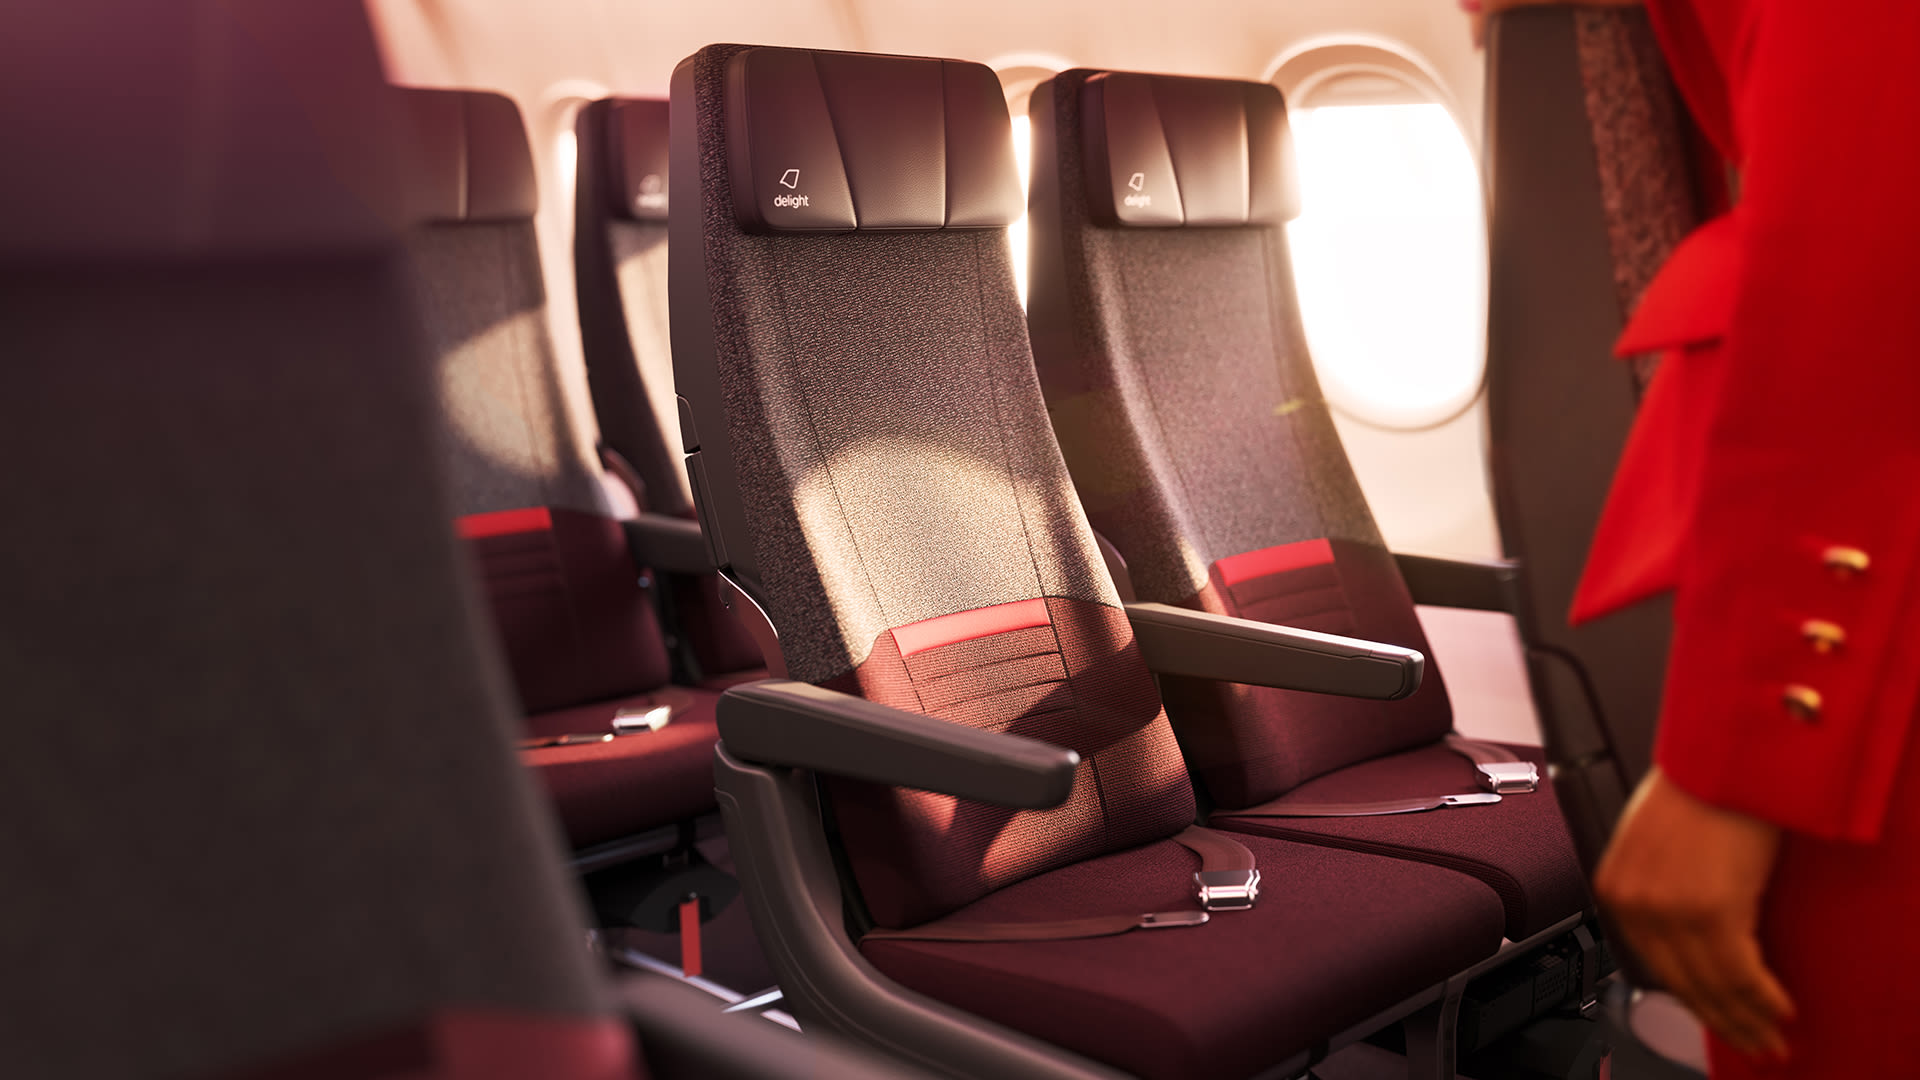 Economy cabin on Virgin Atlantic's Airbus A330neo